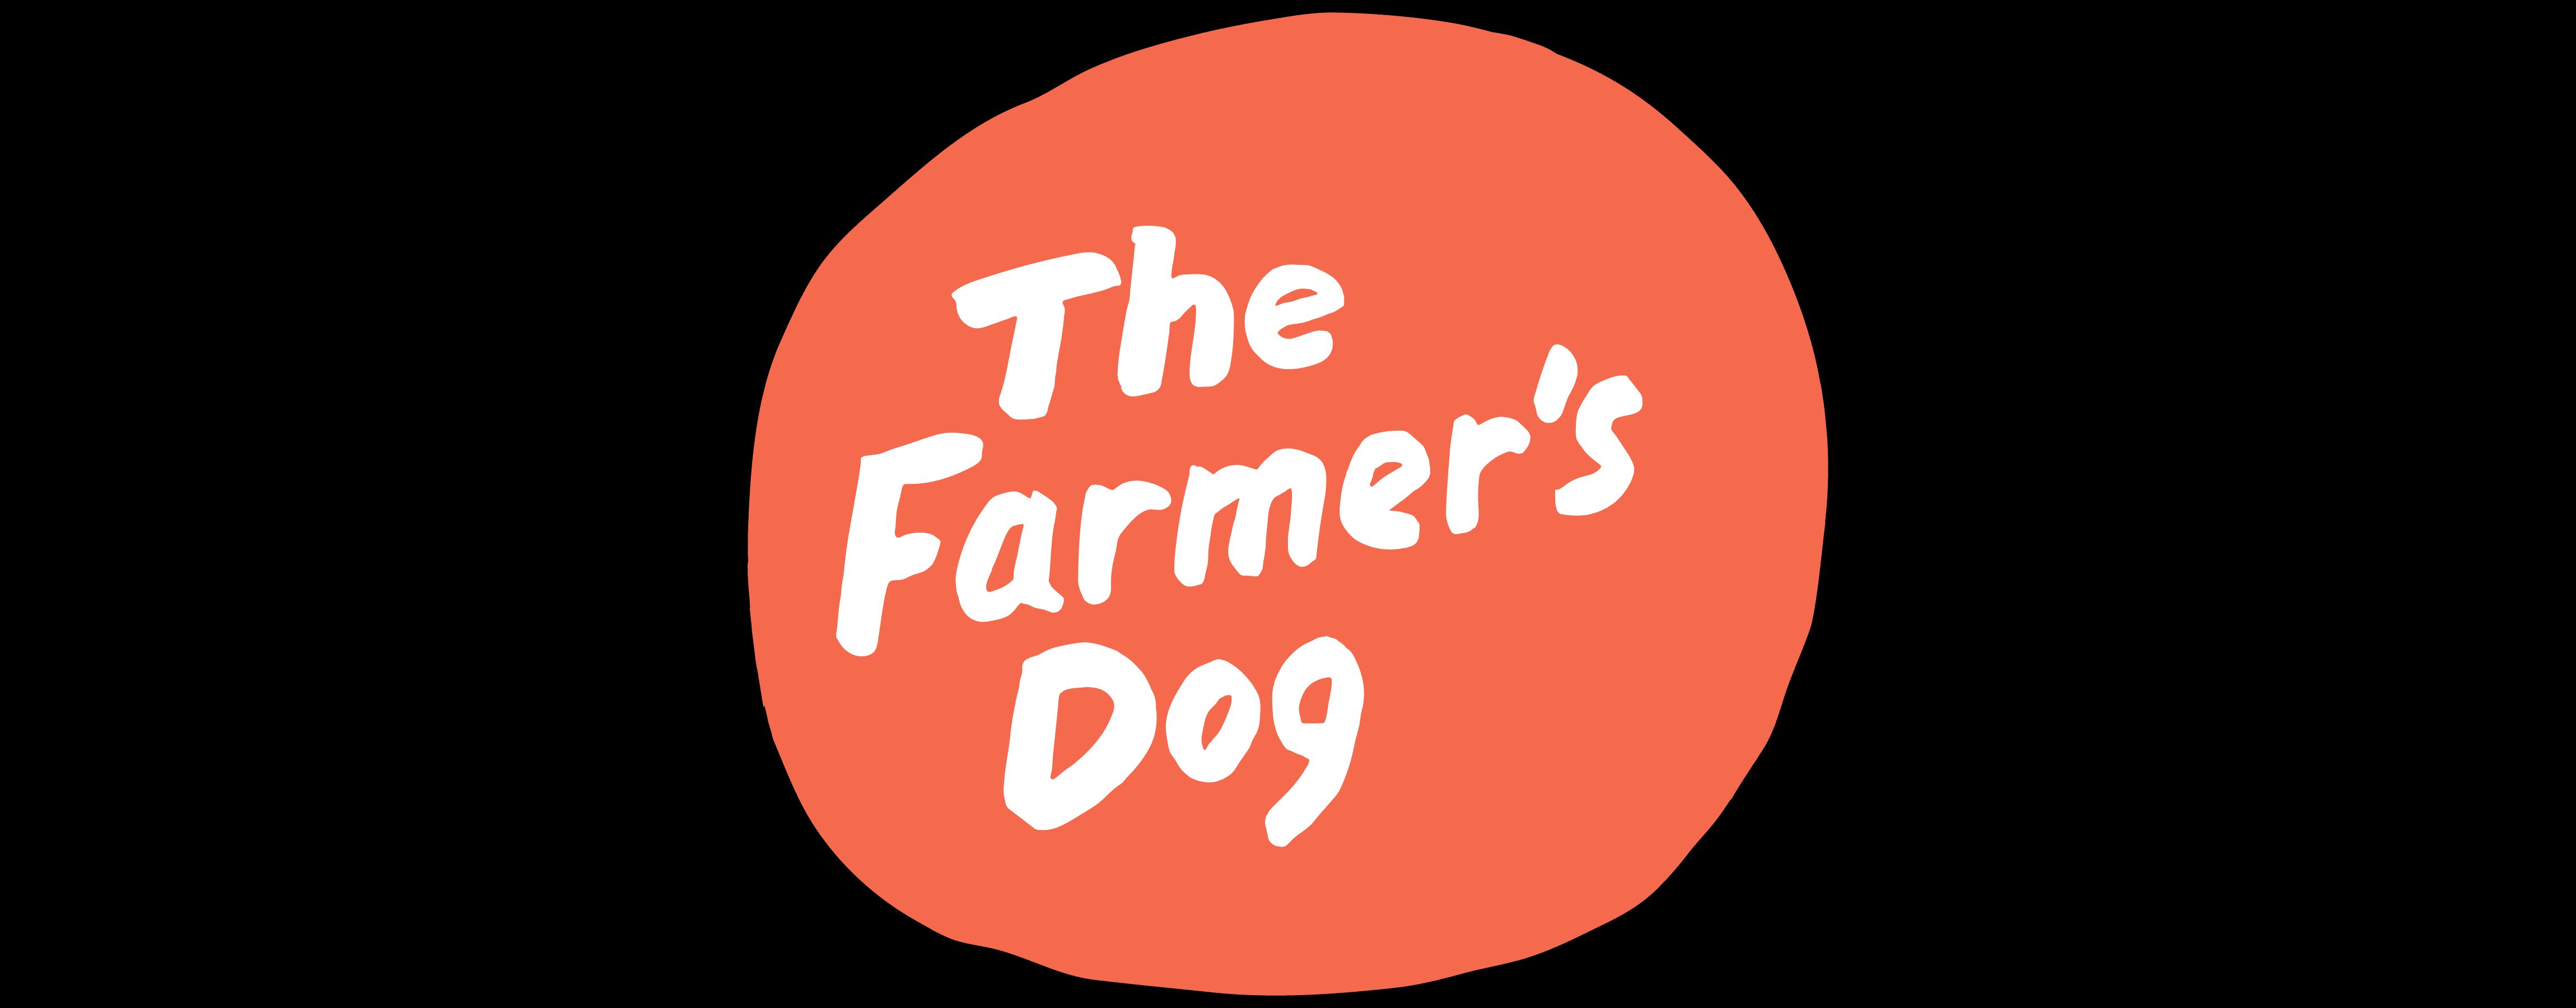 The Farmer’s Dog food logo